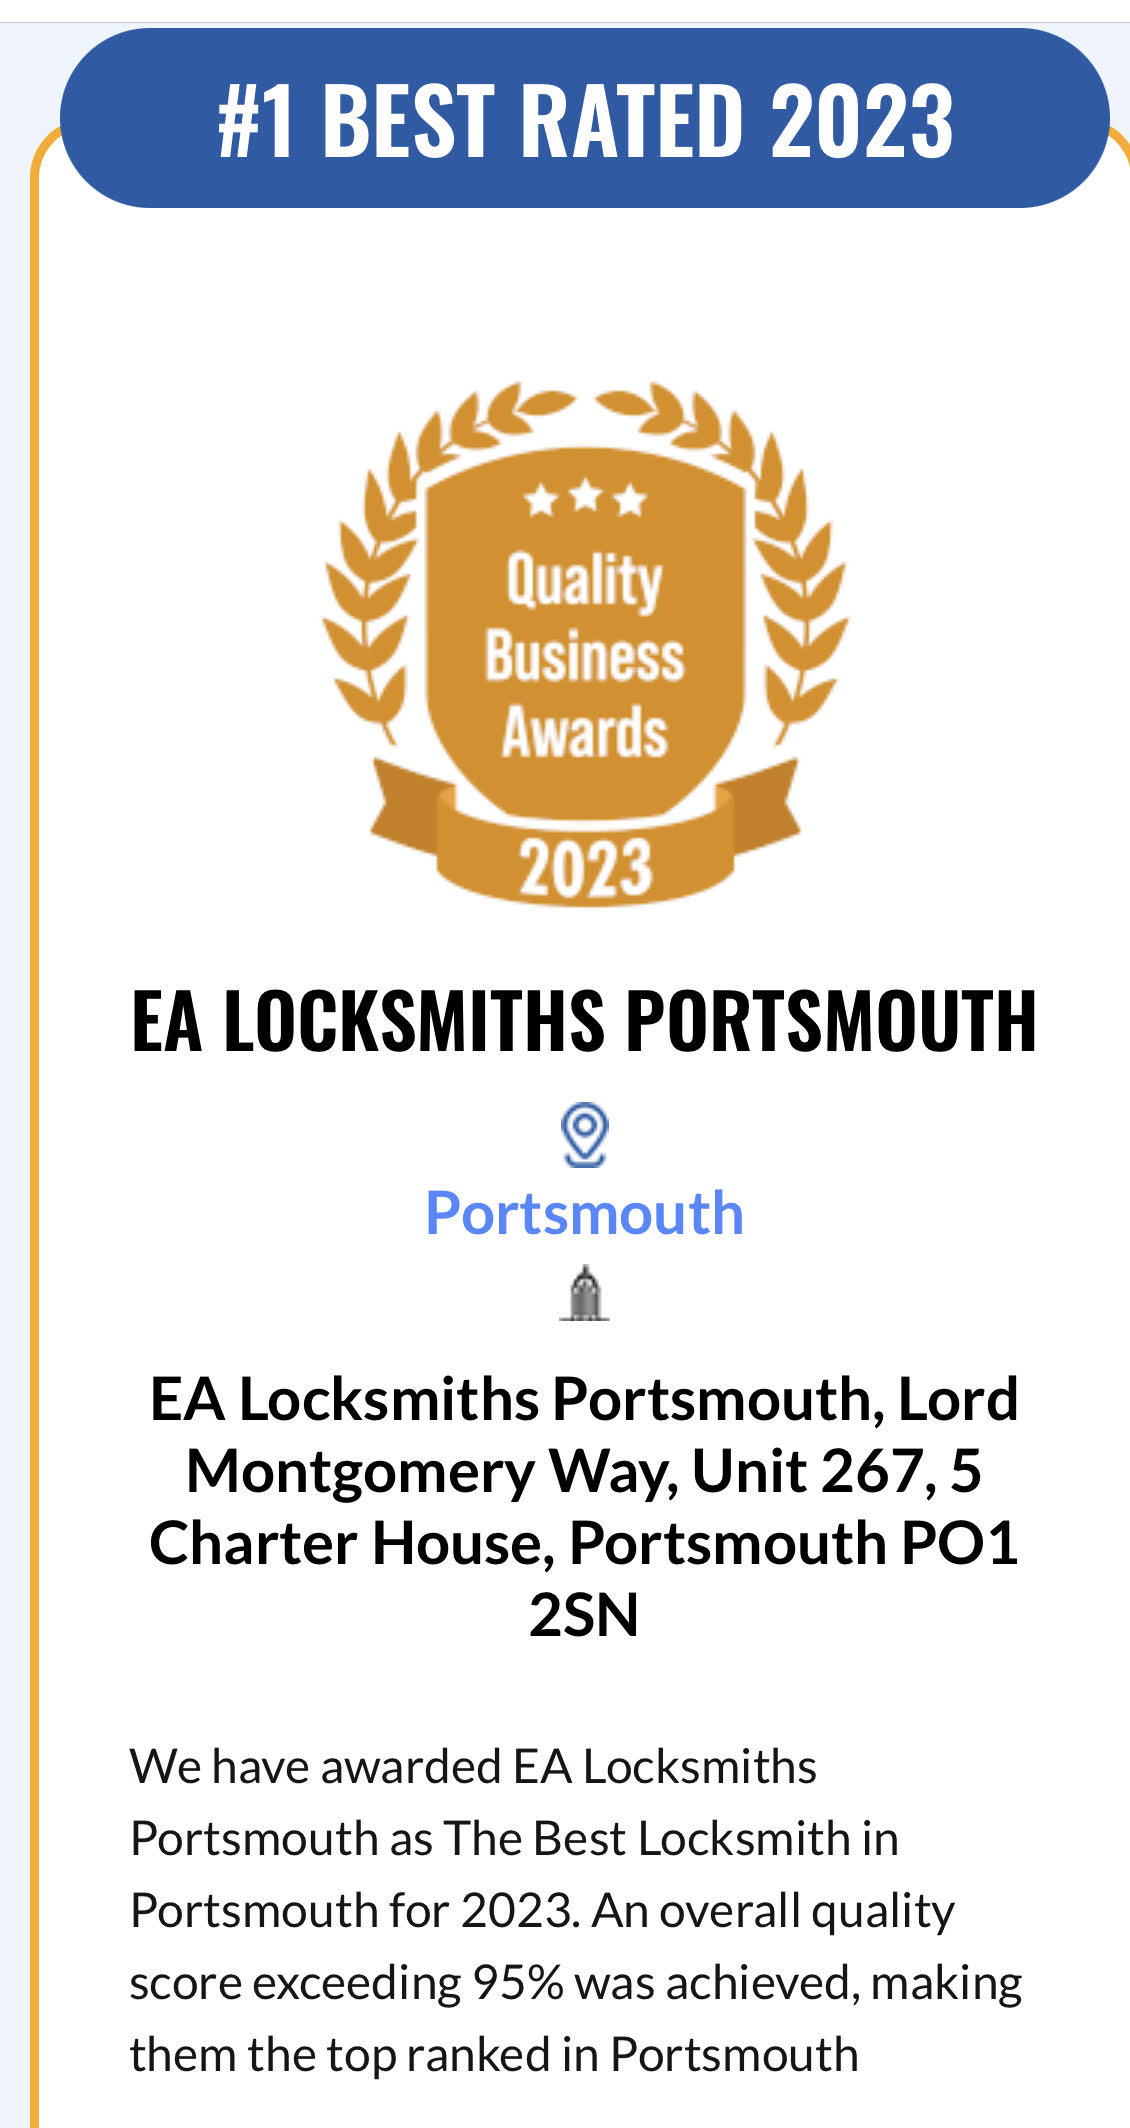 Eddie at EA Locksmiths in Portsmouth receives number 1 best rated locksmith status